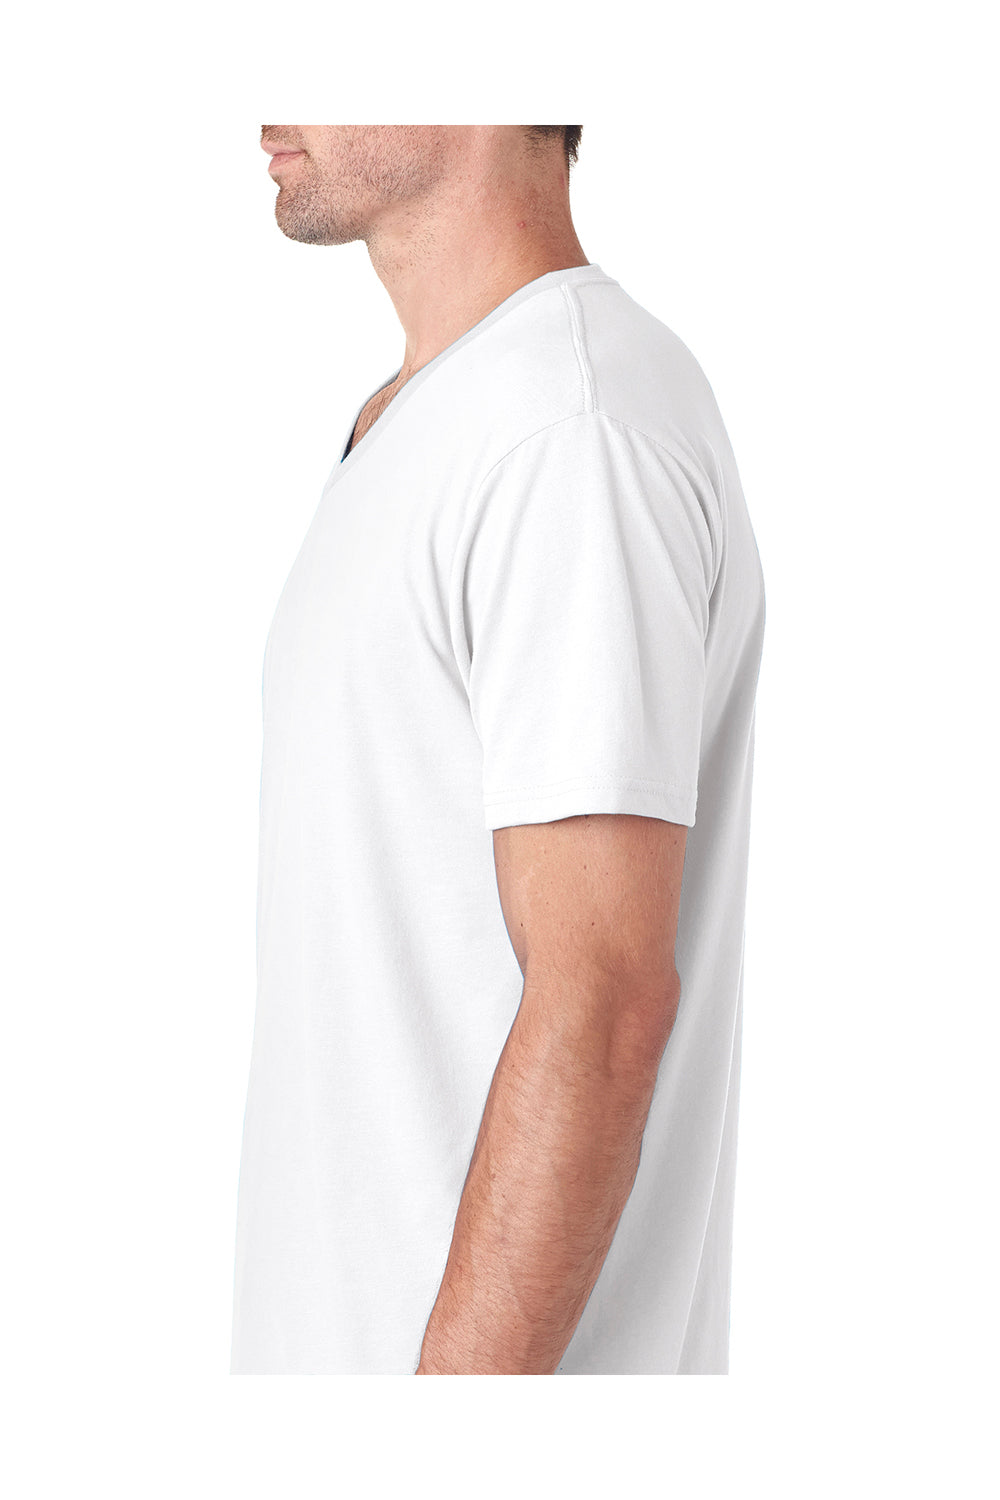 Next Level 6440 Mens Sueded Jersey Short Sleeve V-Neck T-Shirt White Side